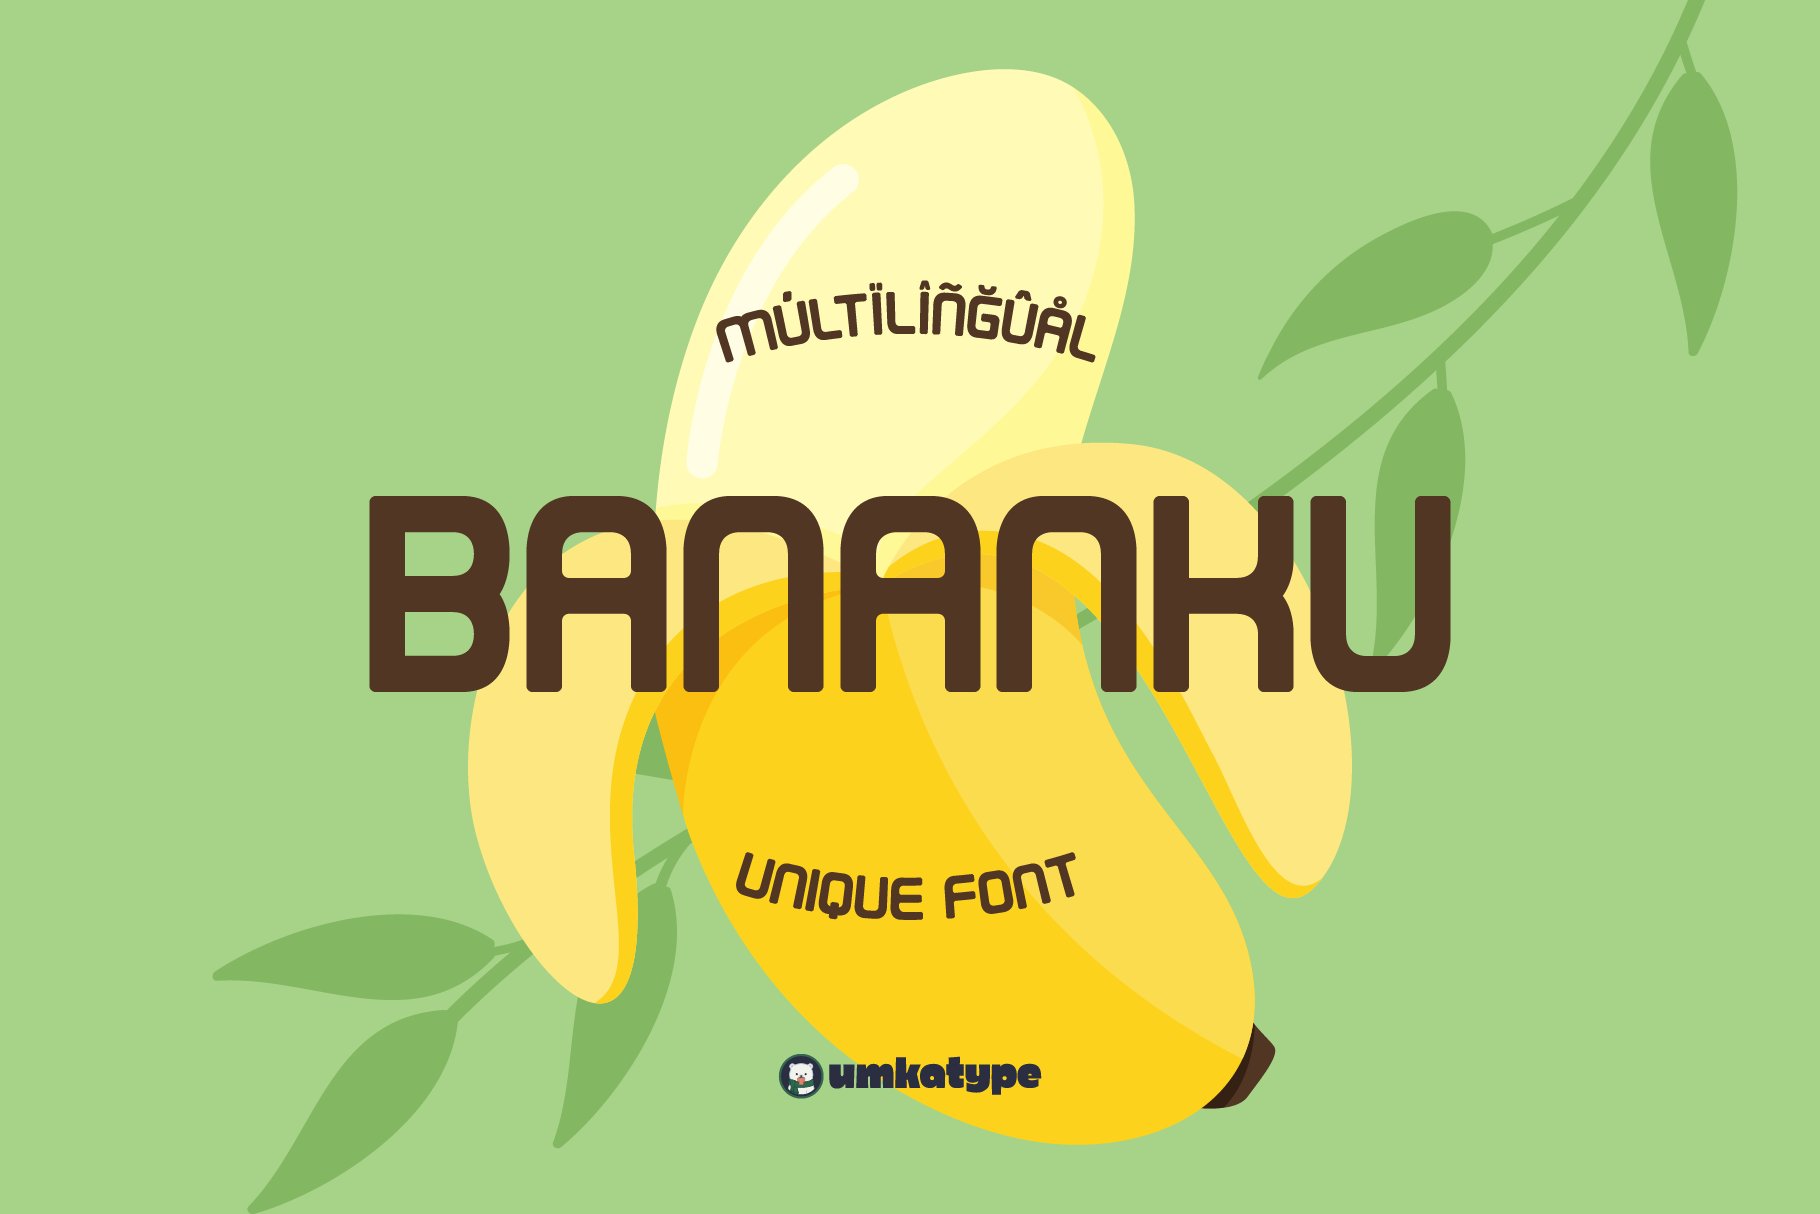 Bananku Font cover image.